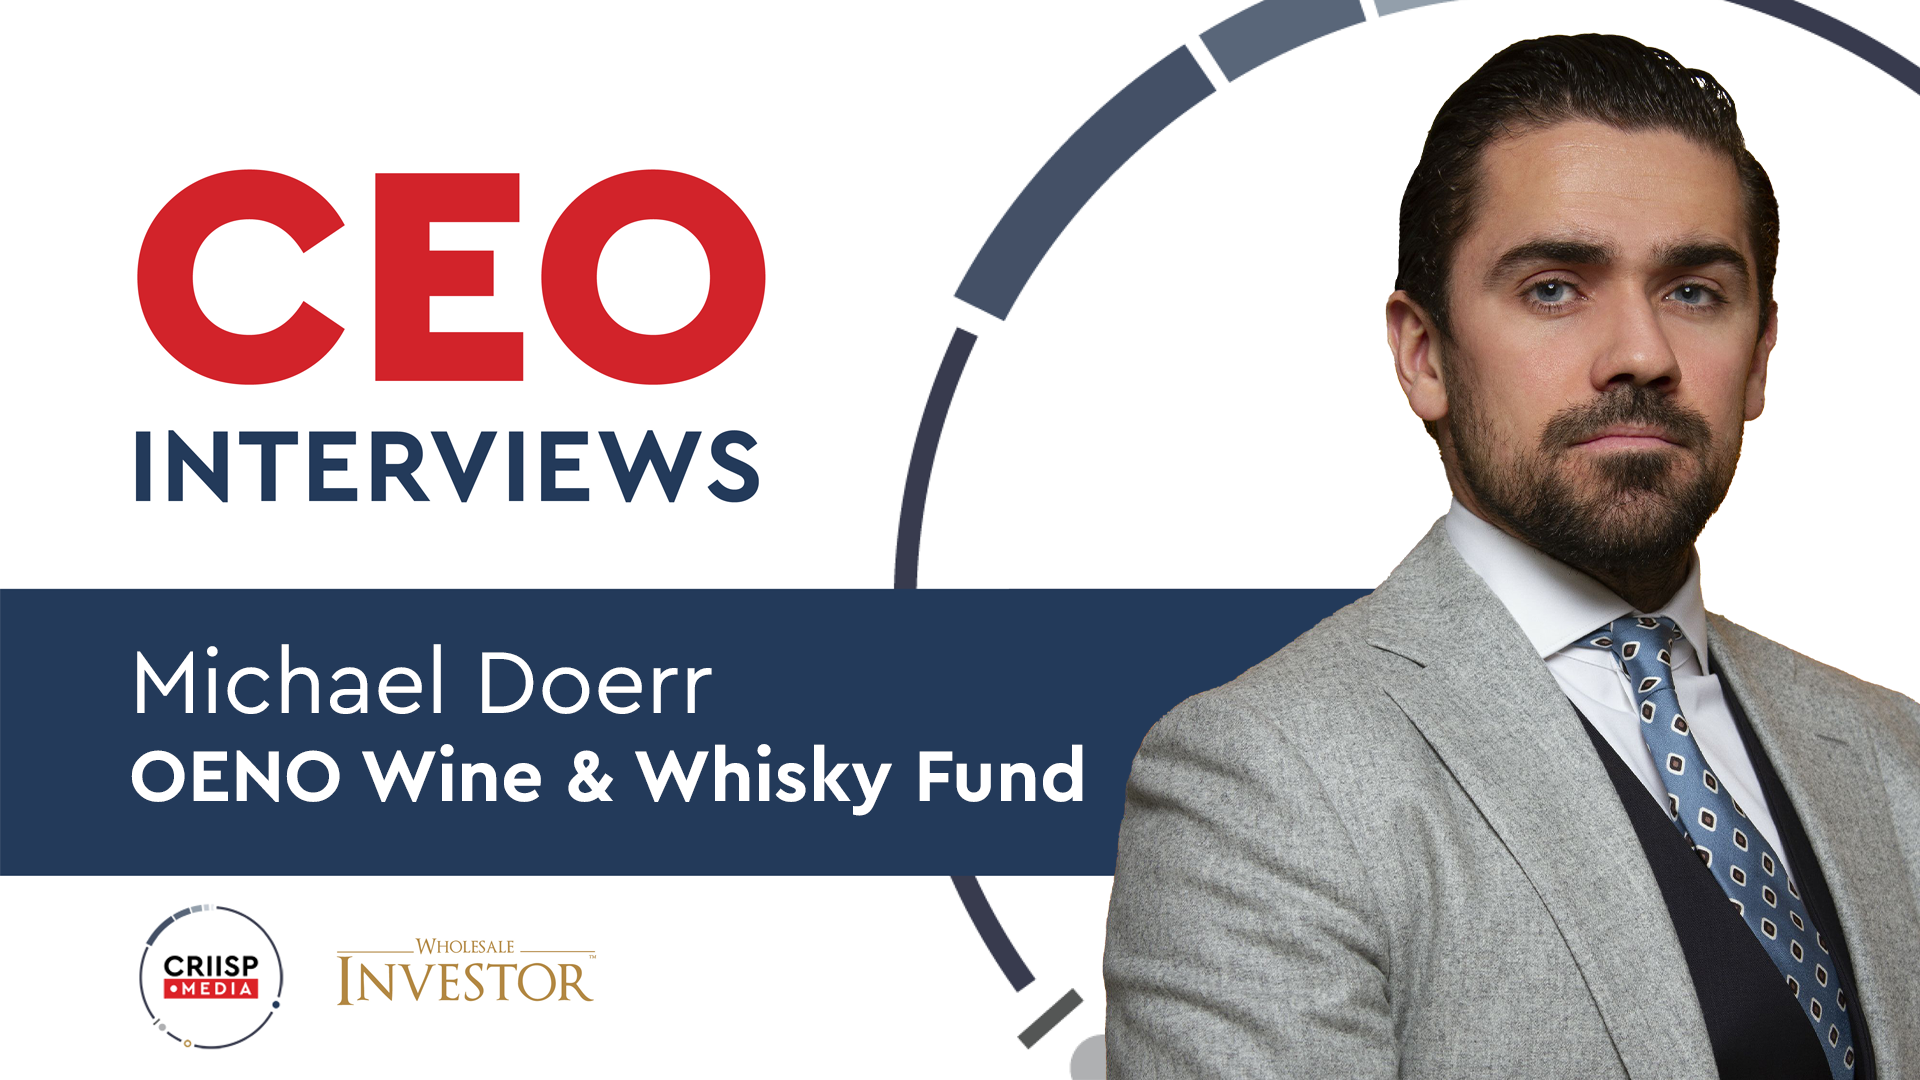 Michael Doerr of OENO Wine & Whisky Fund